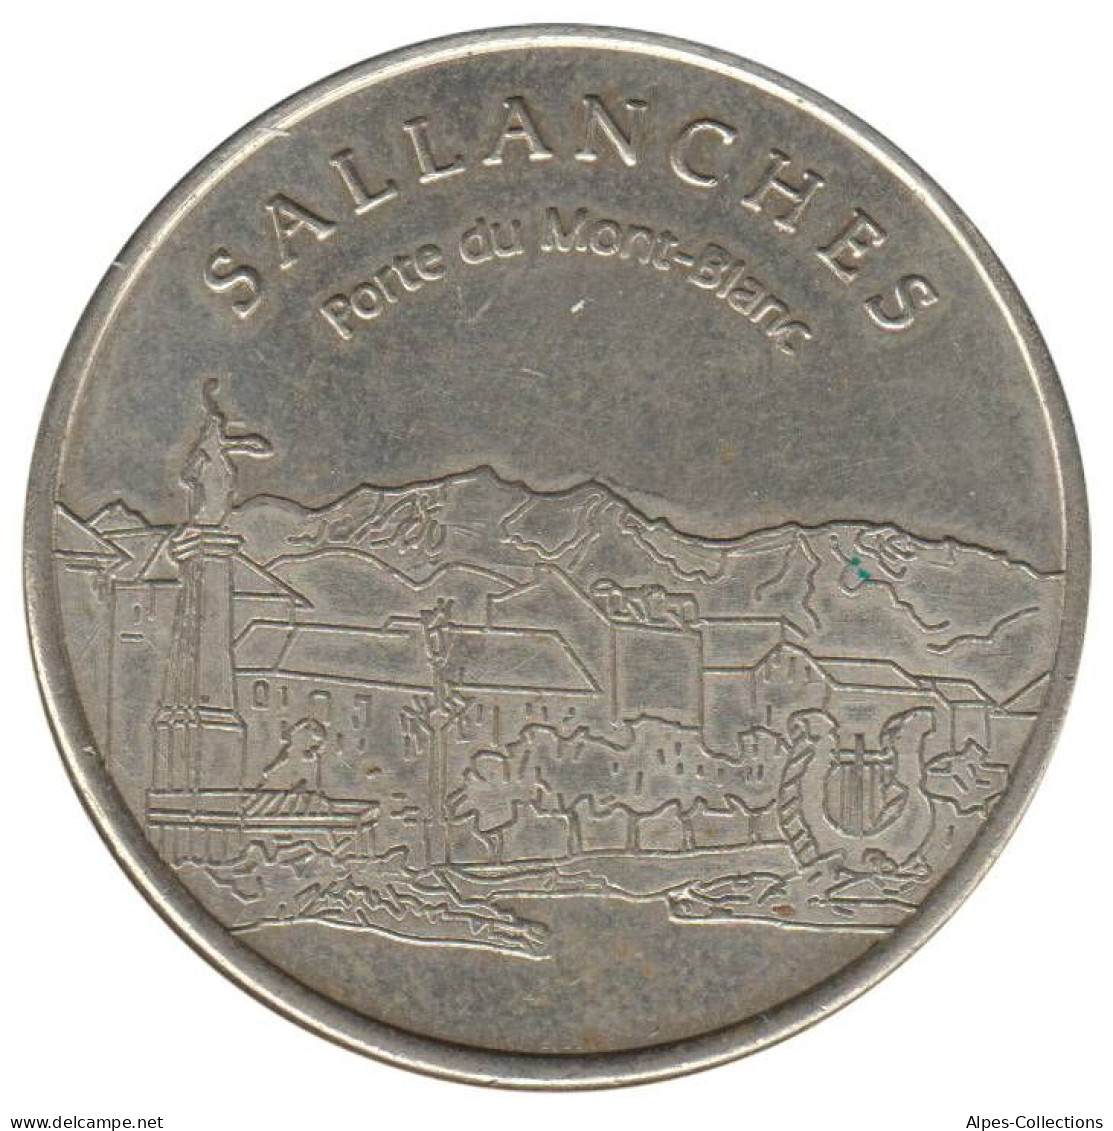 SALLANCHES - EU0020.1 - 2 EURO DES VILLES - Réf: NR - 1998 - Euros Des Villes